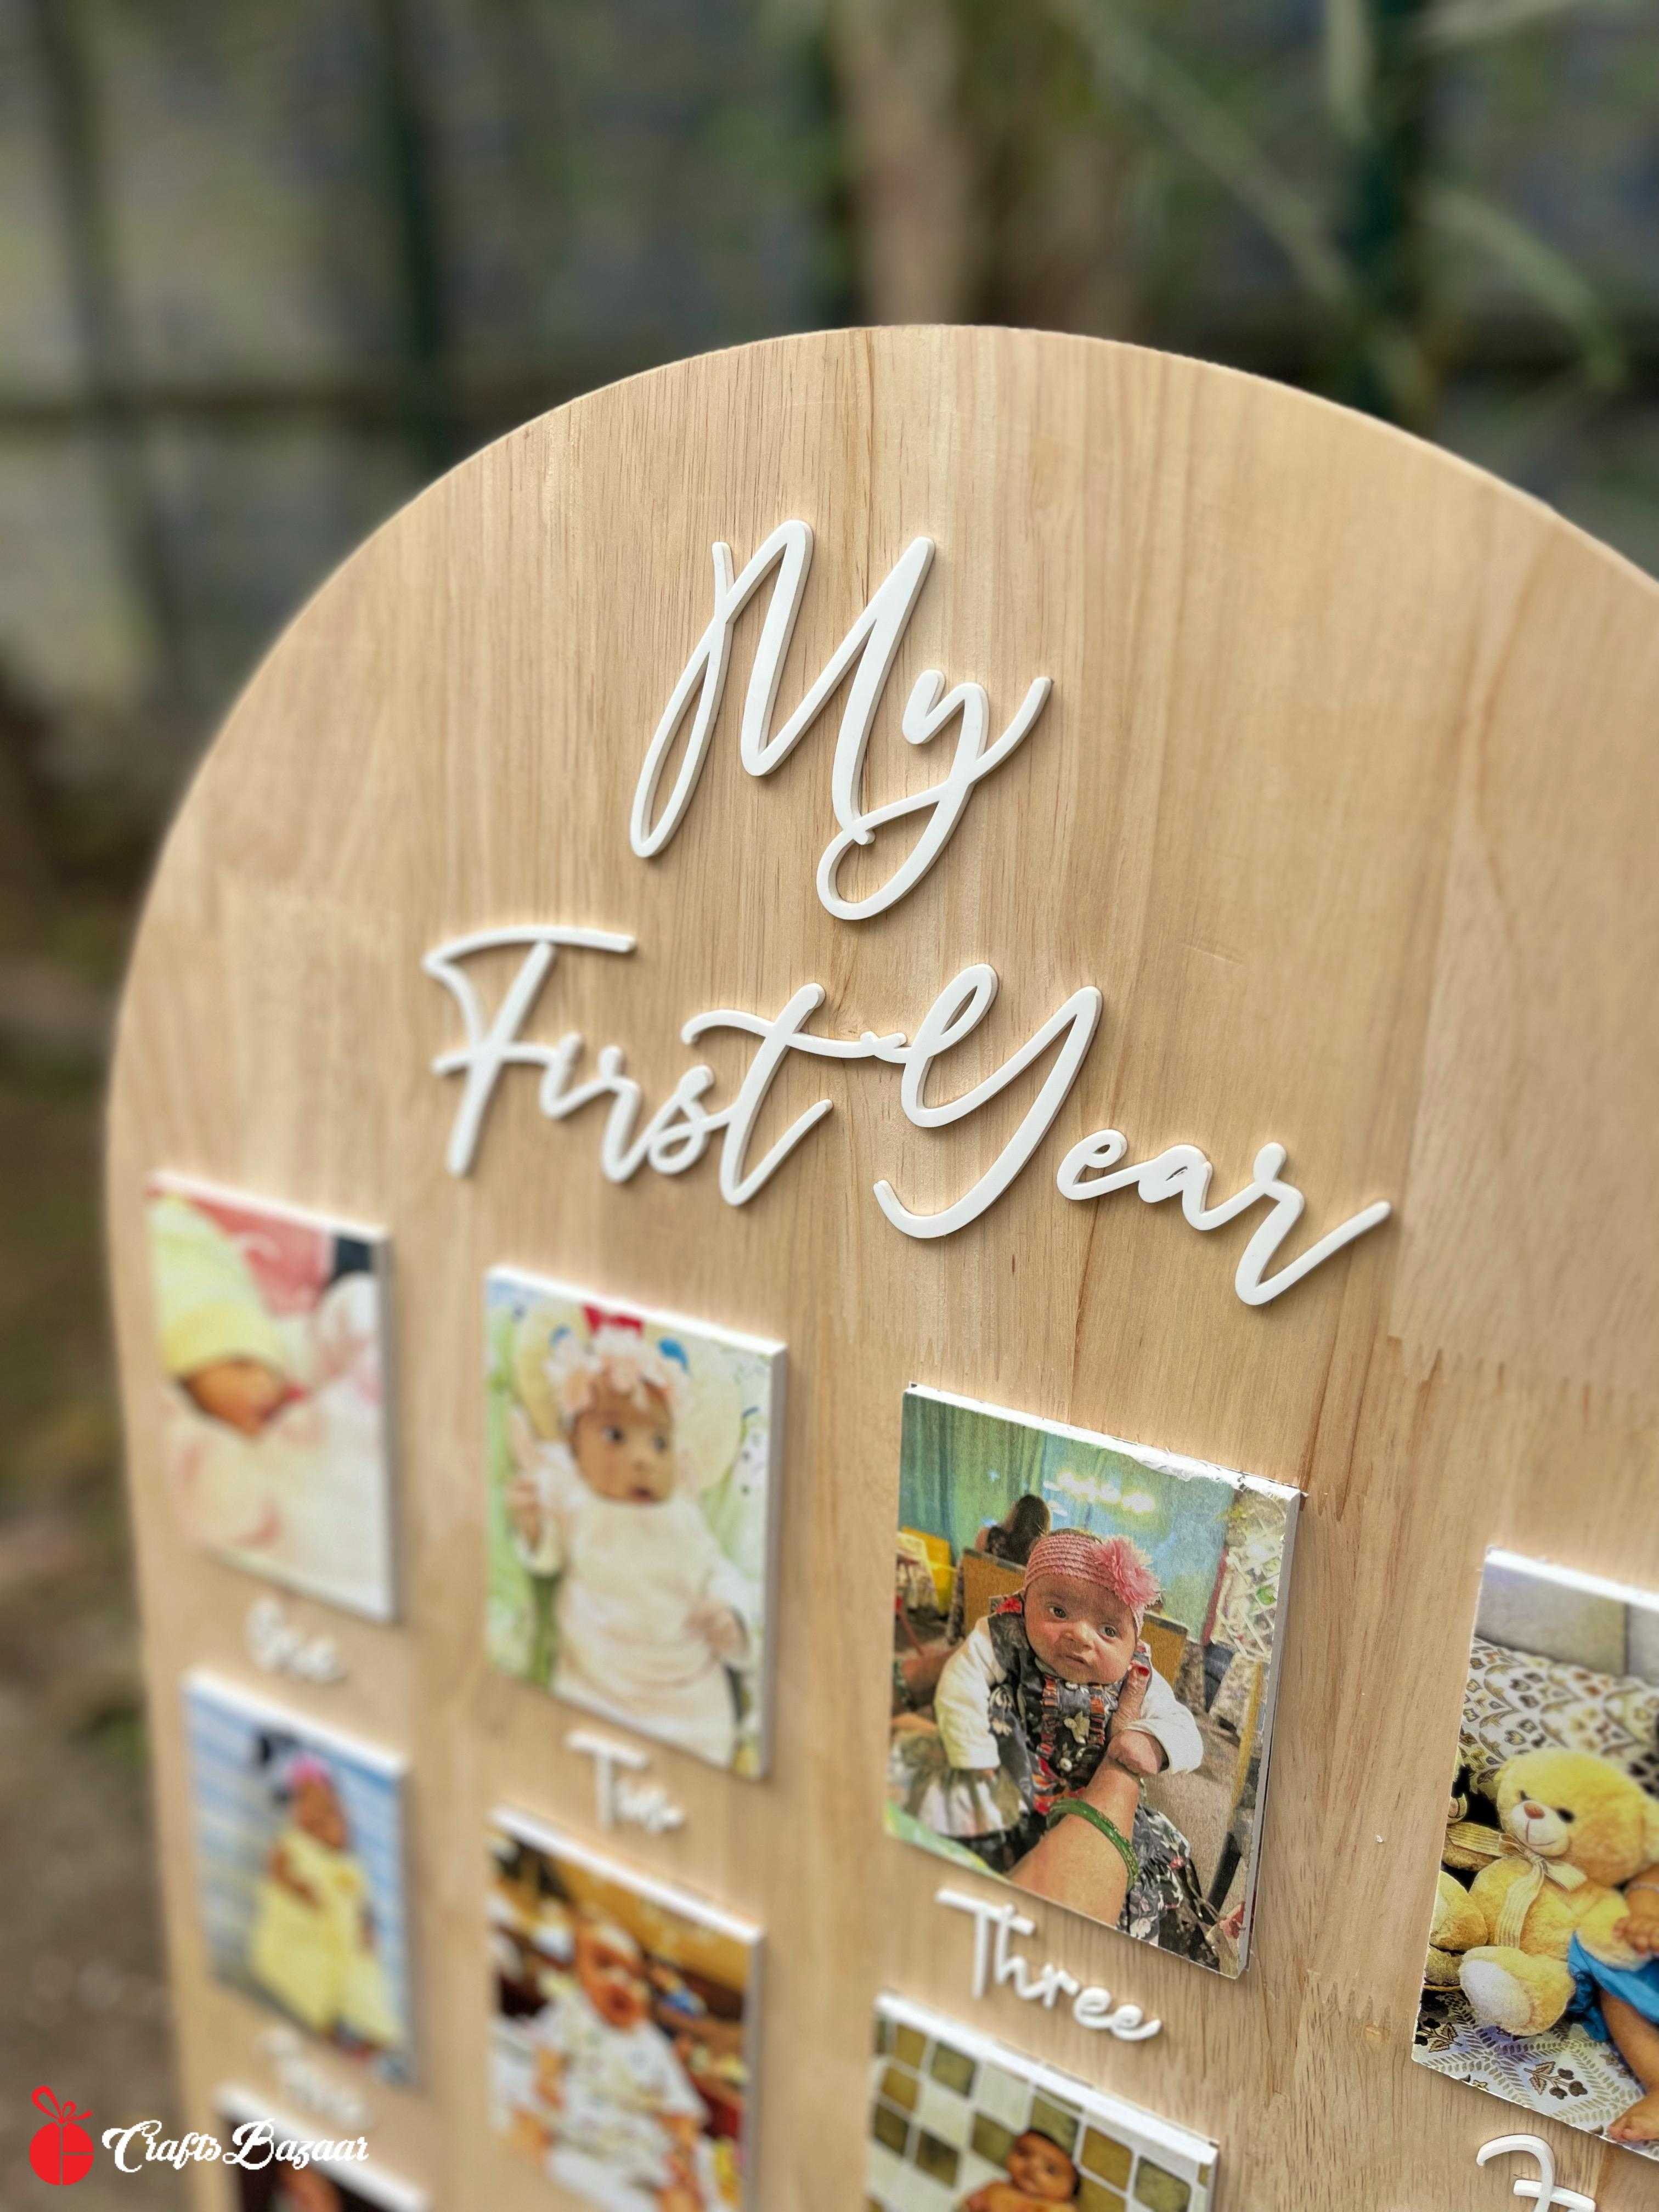 My First Year- Memory Board - Craftsbazaar